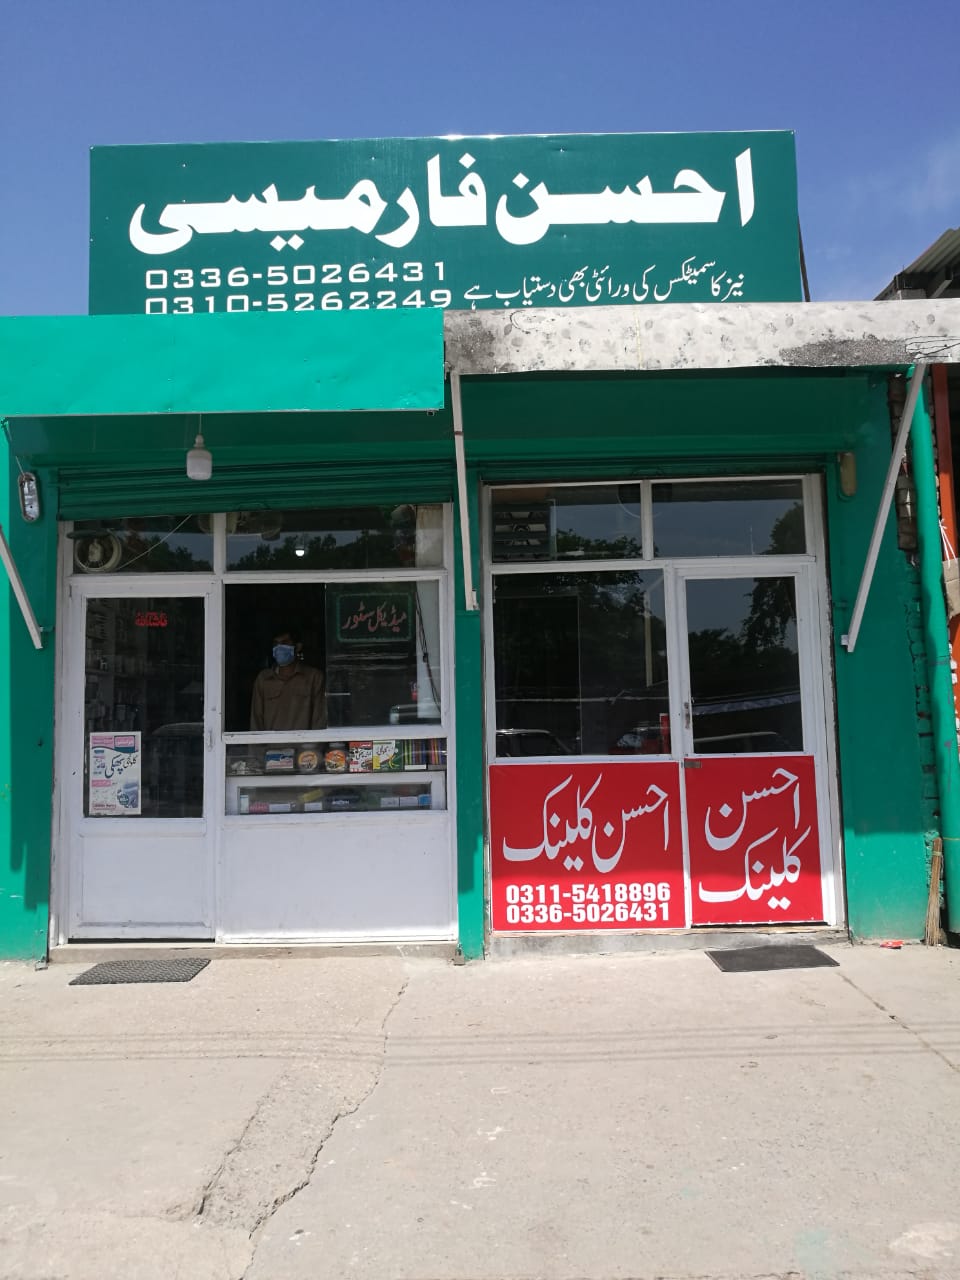 Ahsan pharmacy